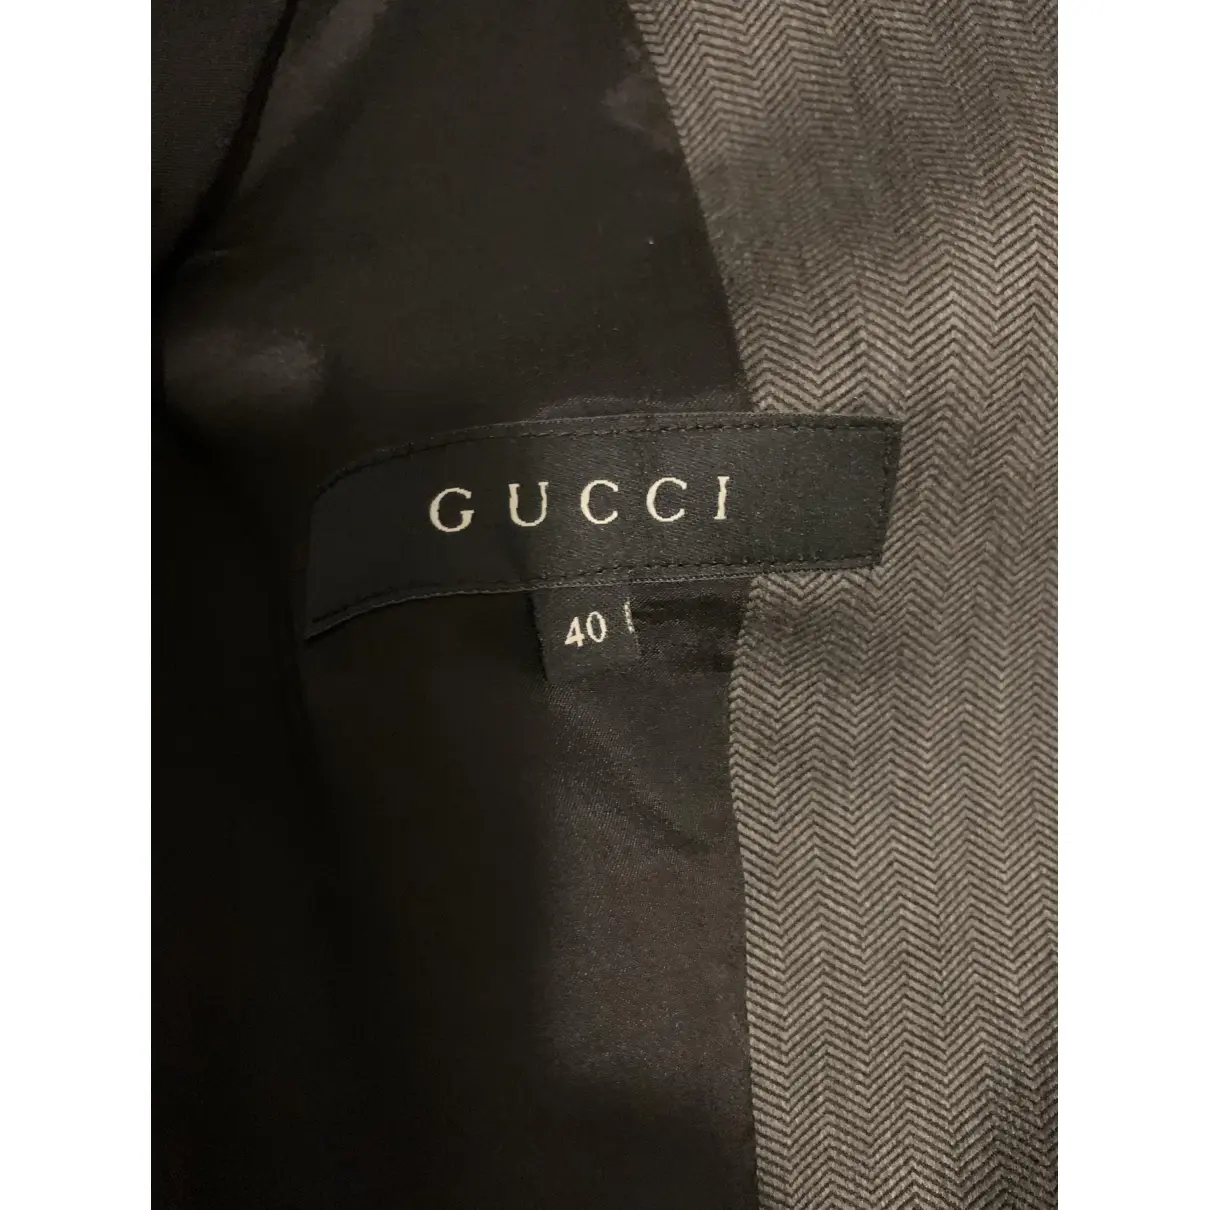 Buy Gucci Suit jacket online - Vintage